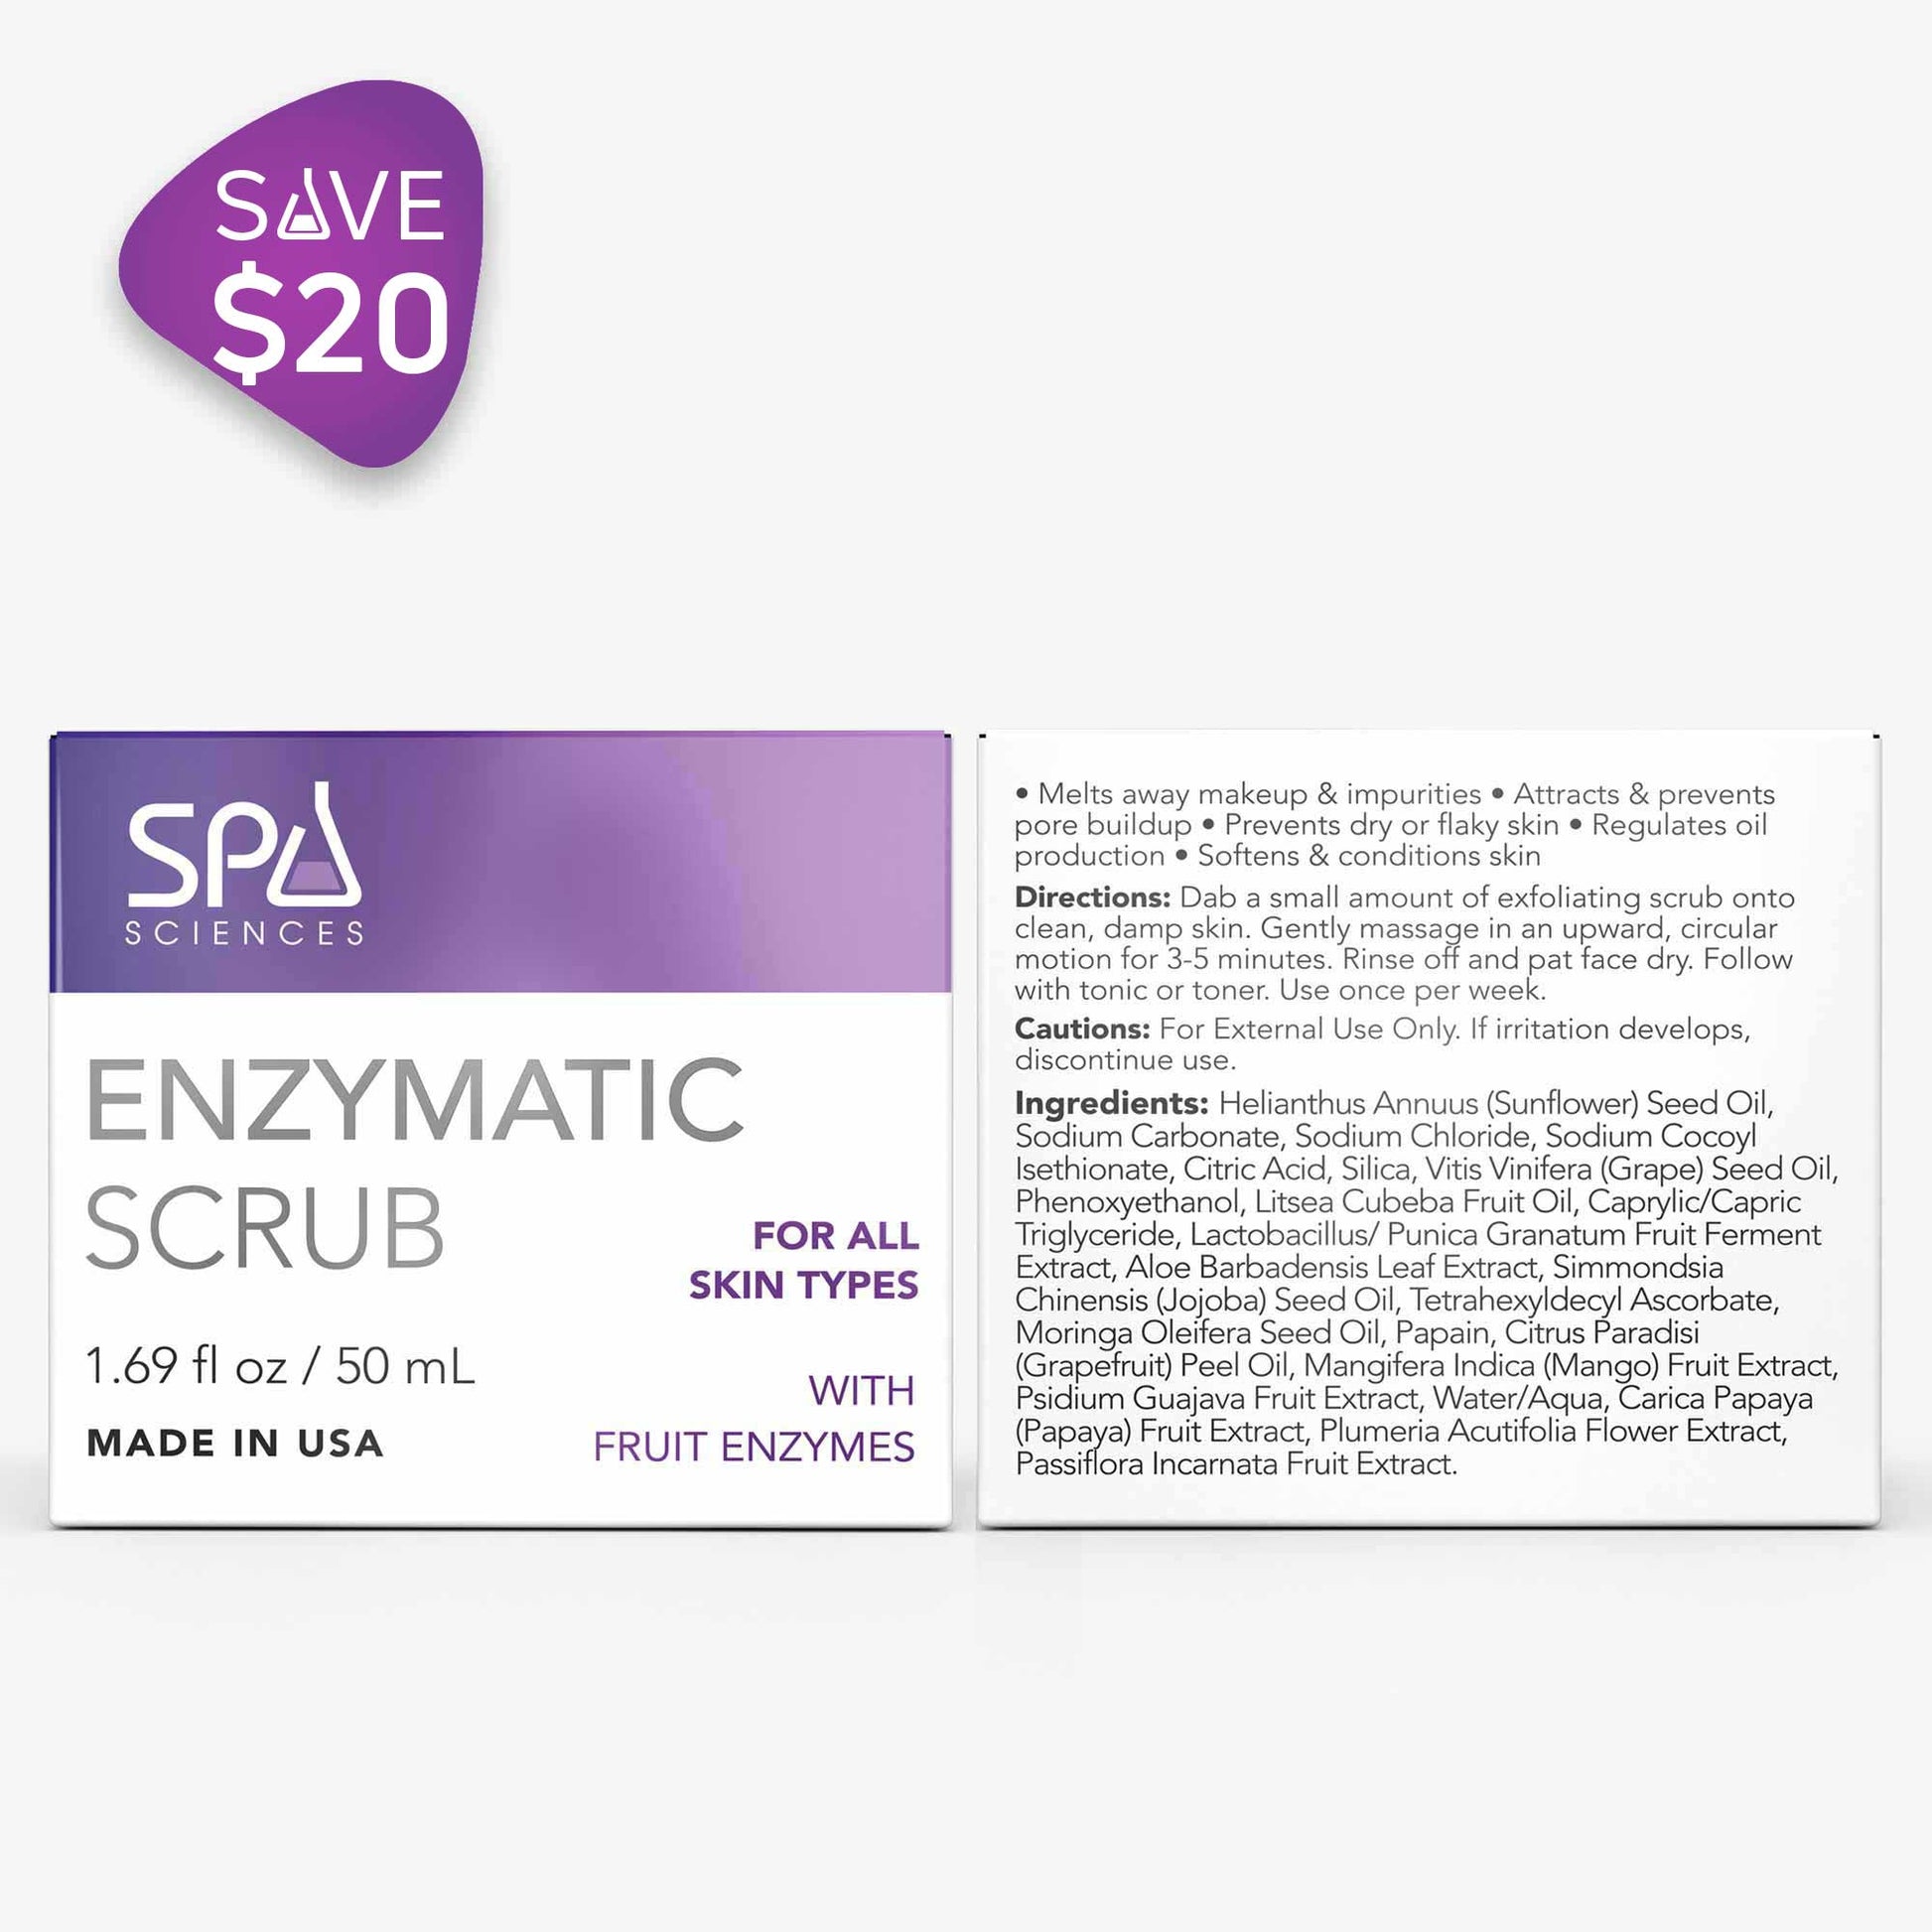 Silky Smooth Set enzymatic scrub from Spa Sciences - save $20.